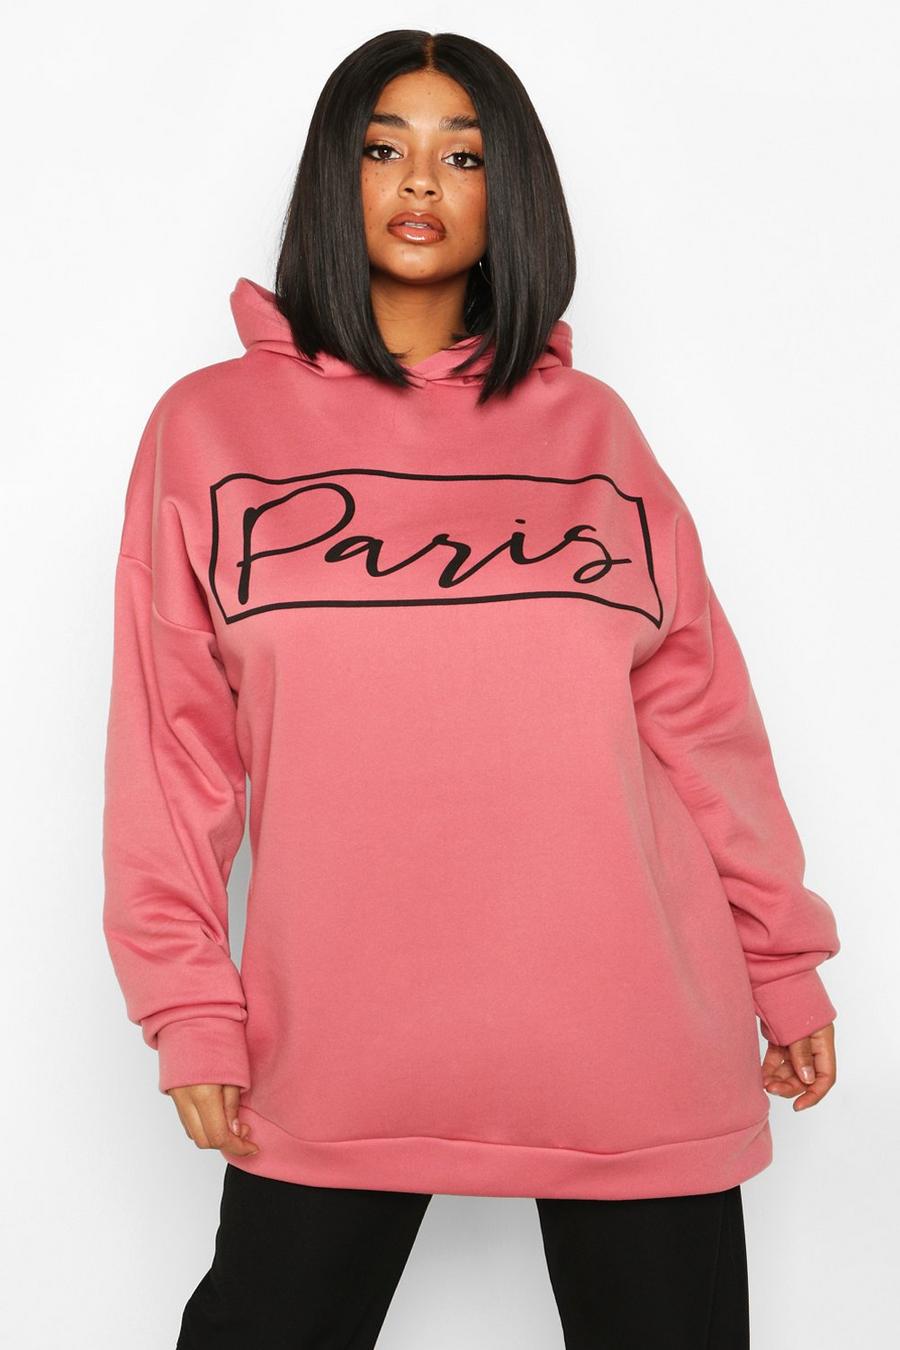 Pink L WOMEN FASHION Jumpers & Sweatshirts Print discount 75% Ms mode sweatshirt 